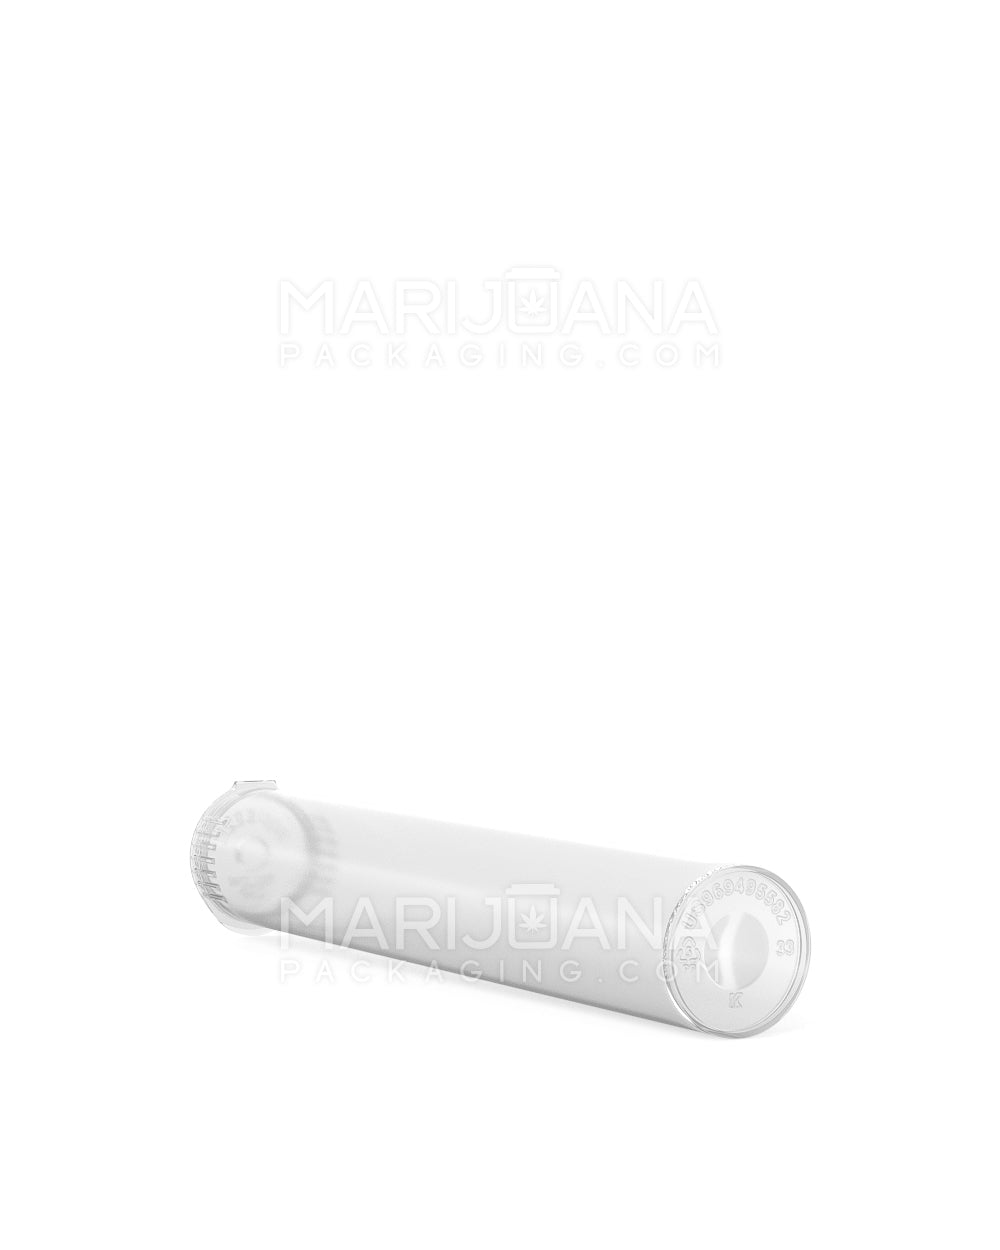 POLLEN GEAR | Child Resistant Pop Top Plastic Snap Cap Pre-Roll Tubes | 116mm - Clear - 1008 Count - 6